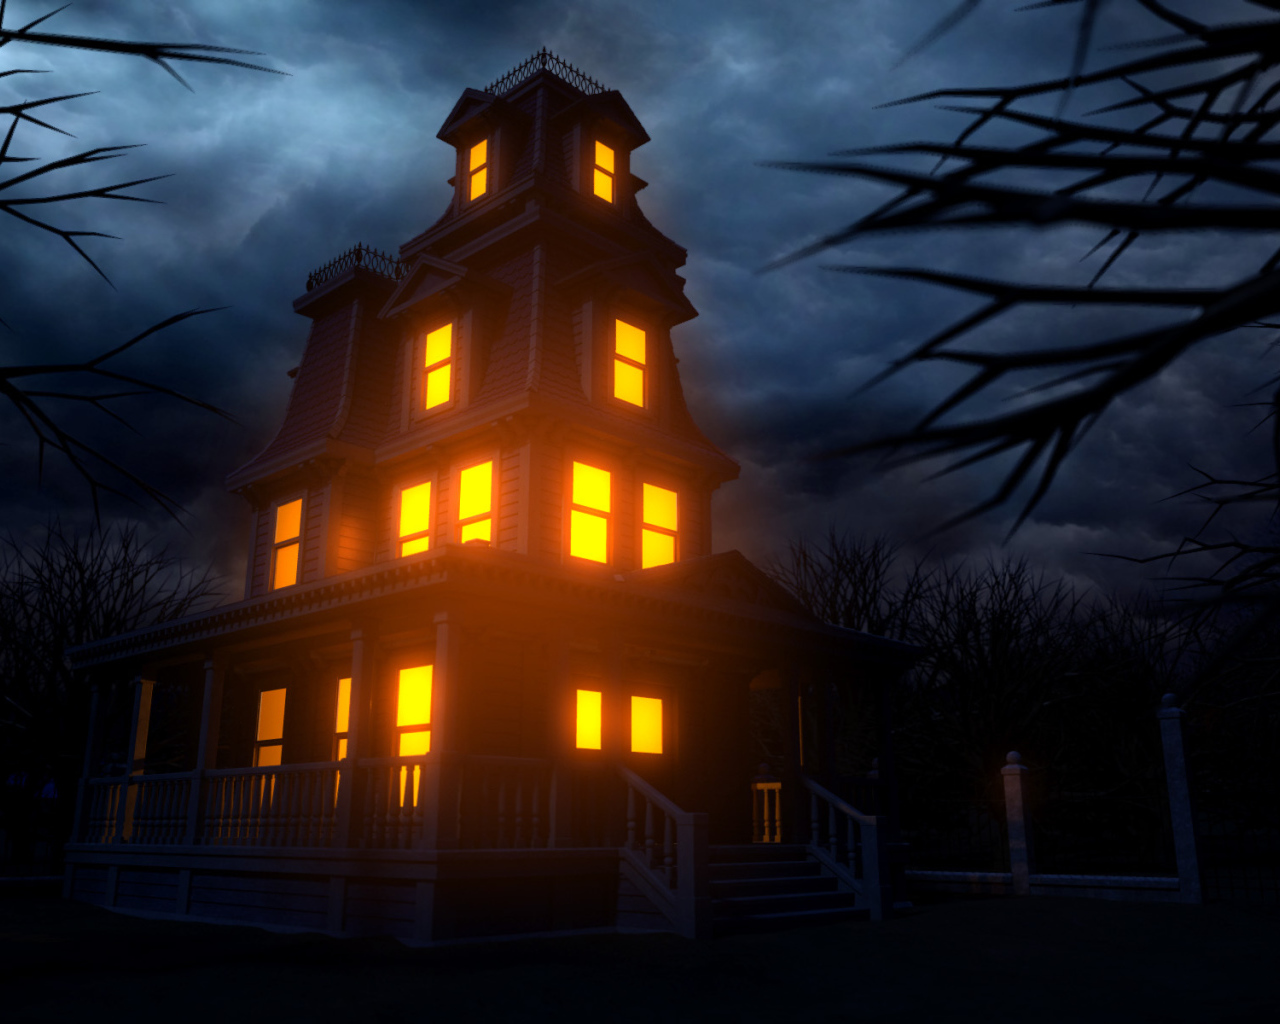 Хэллоуин дом с привидениями